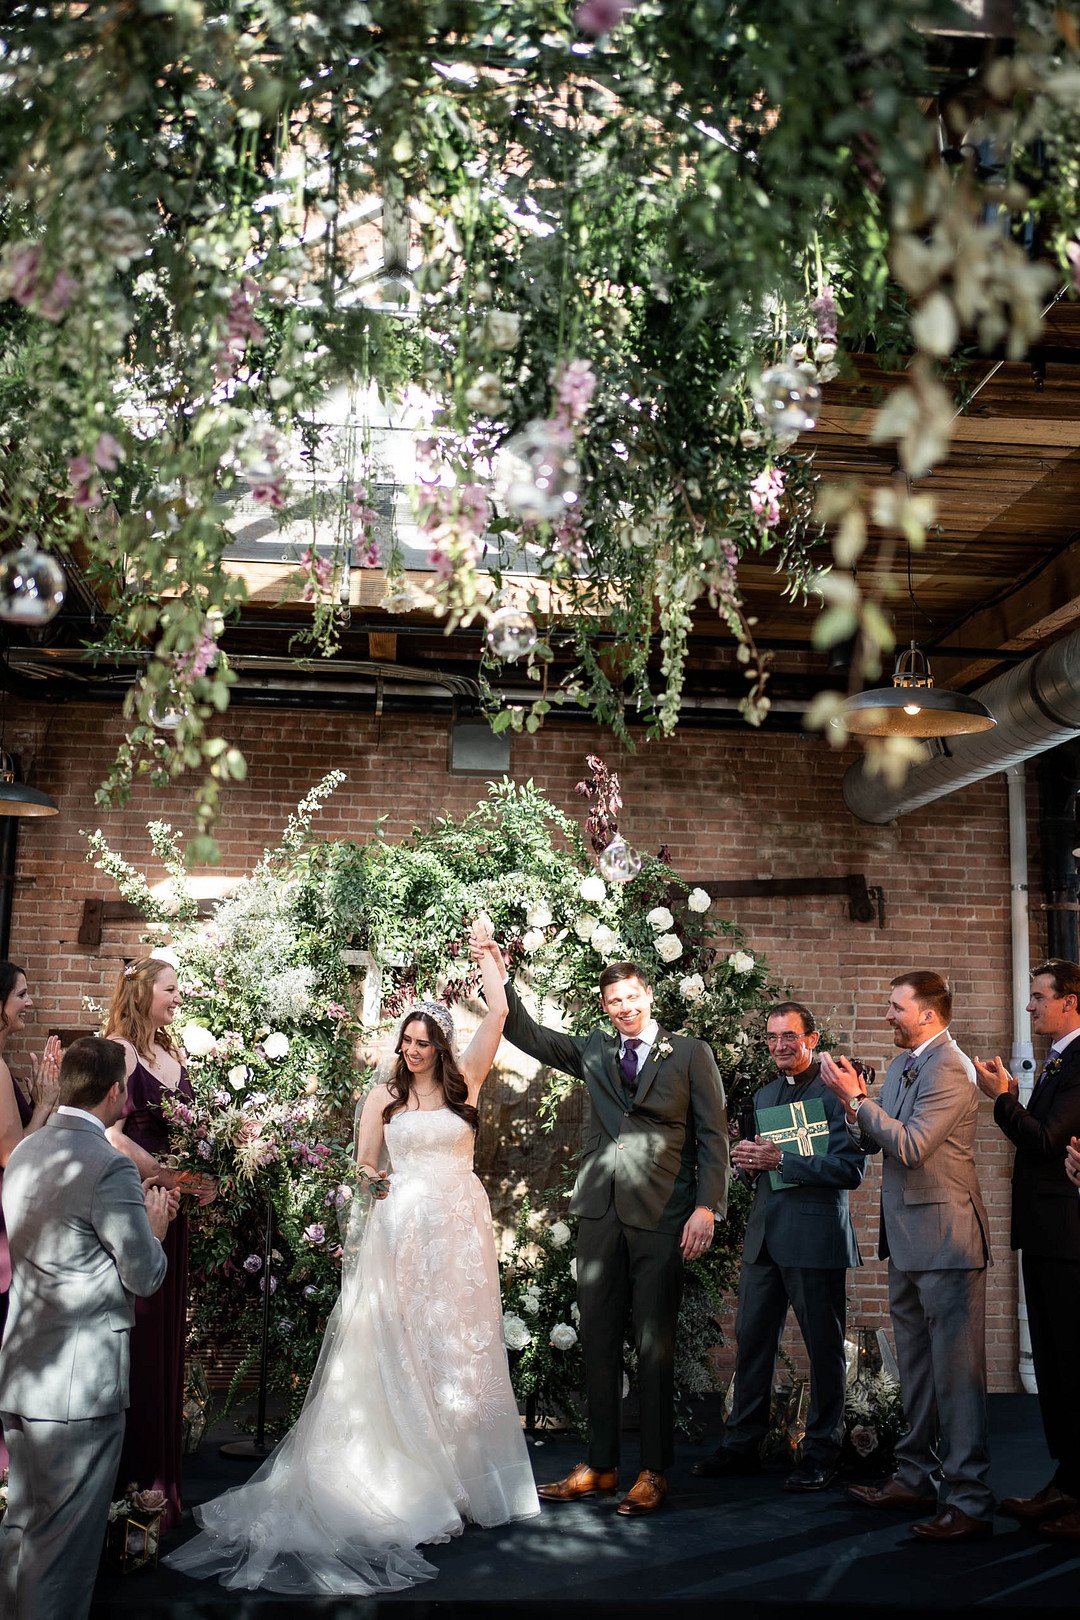 Sullivan_Hirth_Lauren Ashley Studios_Enchanting Wedding Morgan Manufacturing Chicago_-104_low - Copy.jpg